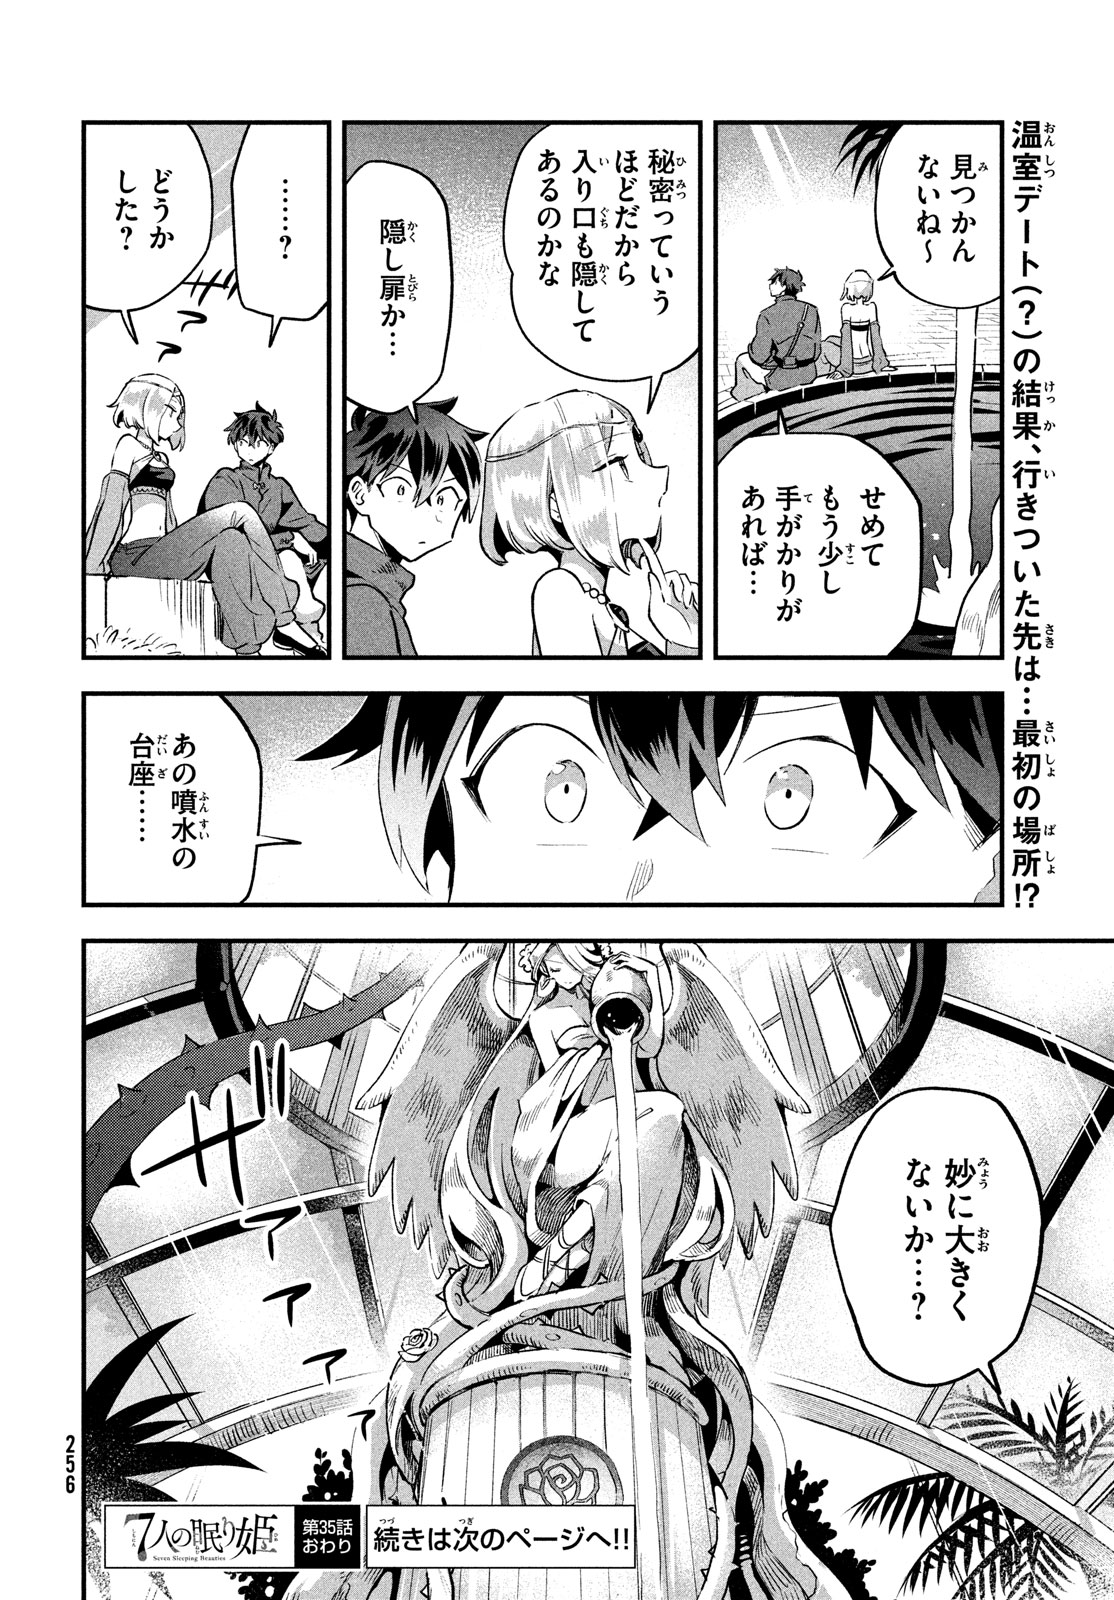 7-nin no Nemuri Hime - Chapter 35 - Page 14